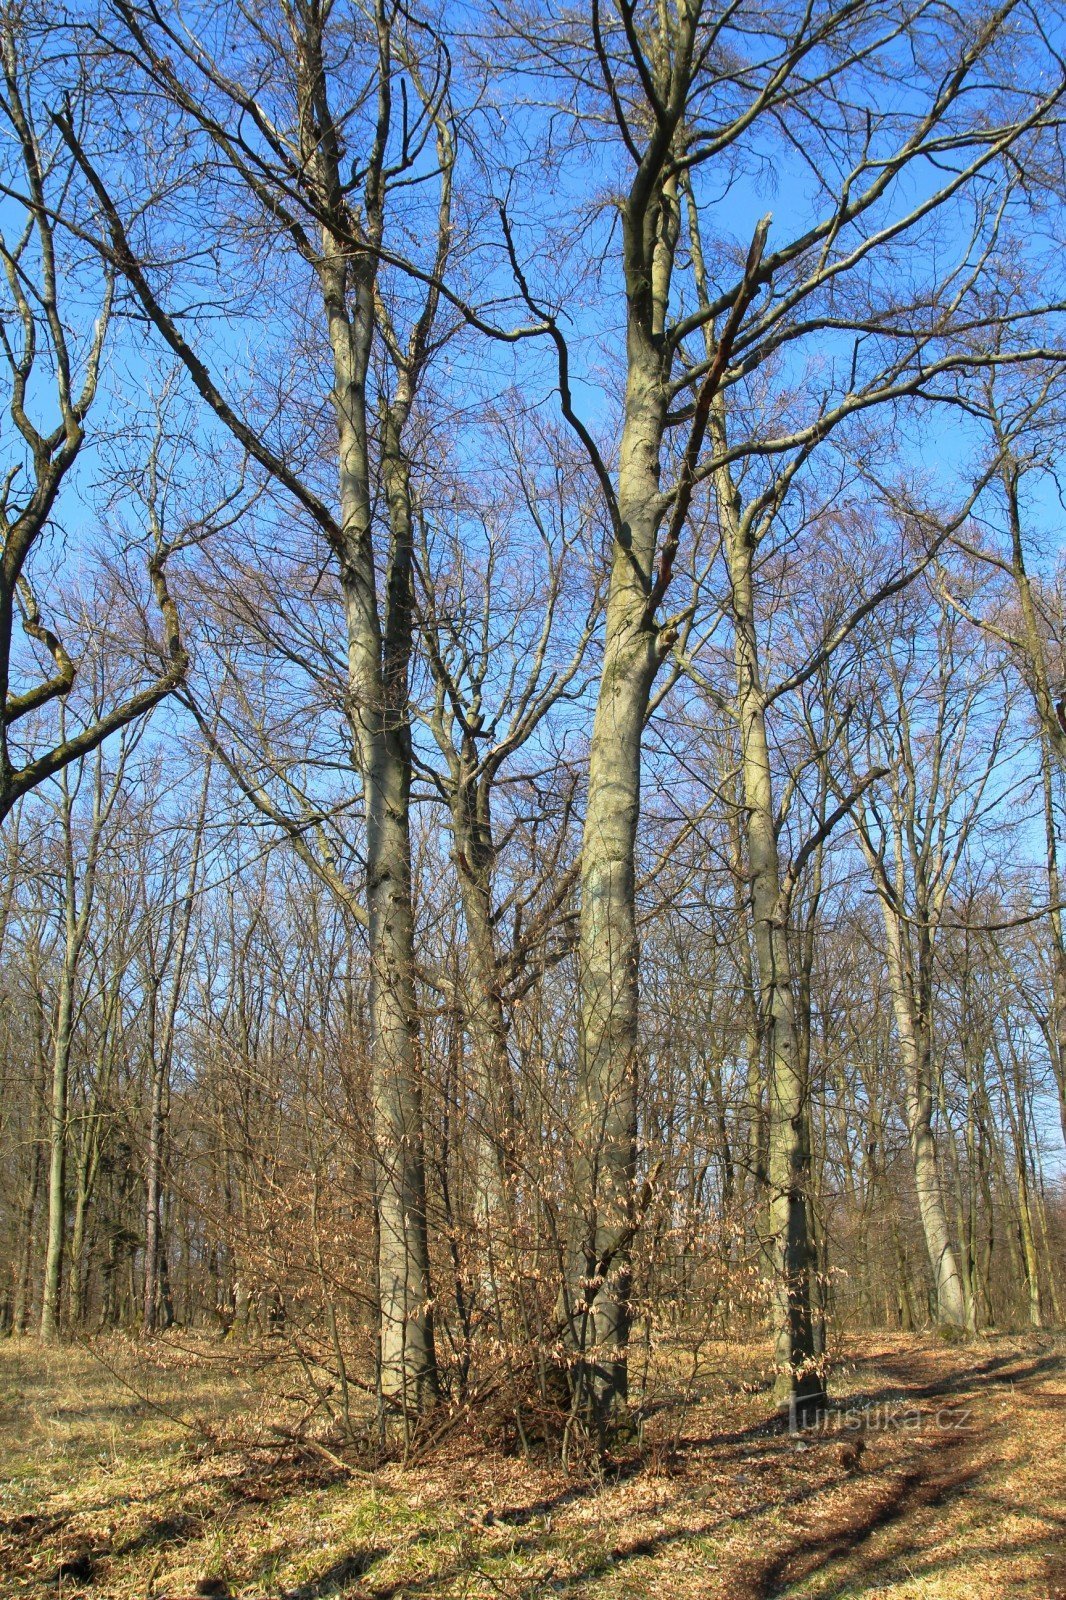 Grupa krupnih bukovih stabala, u pozadini spomenik bukve